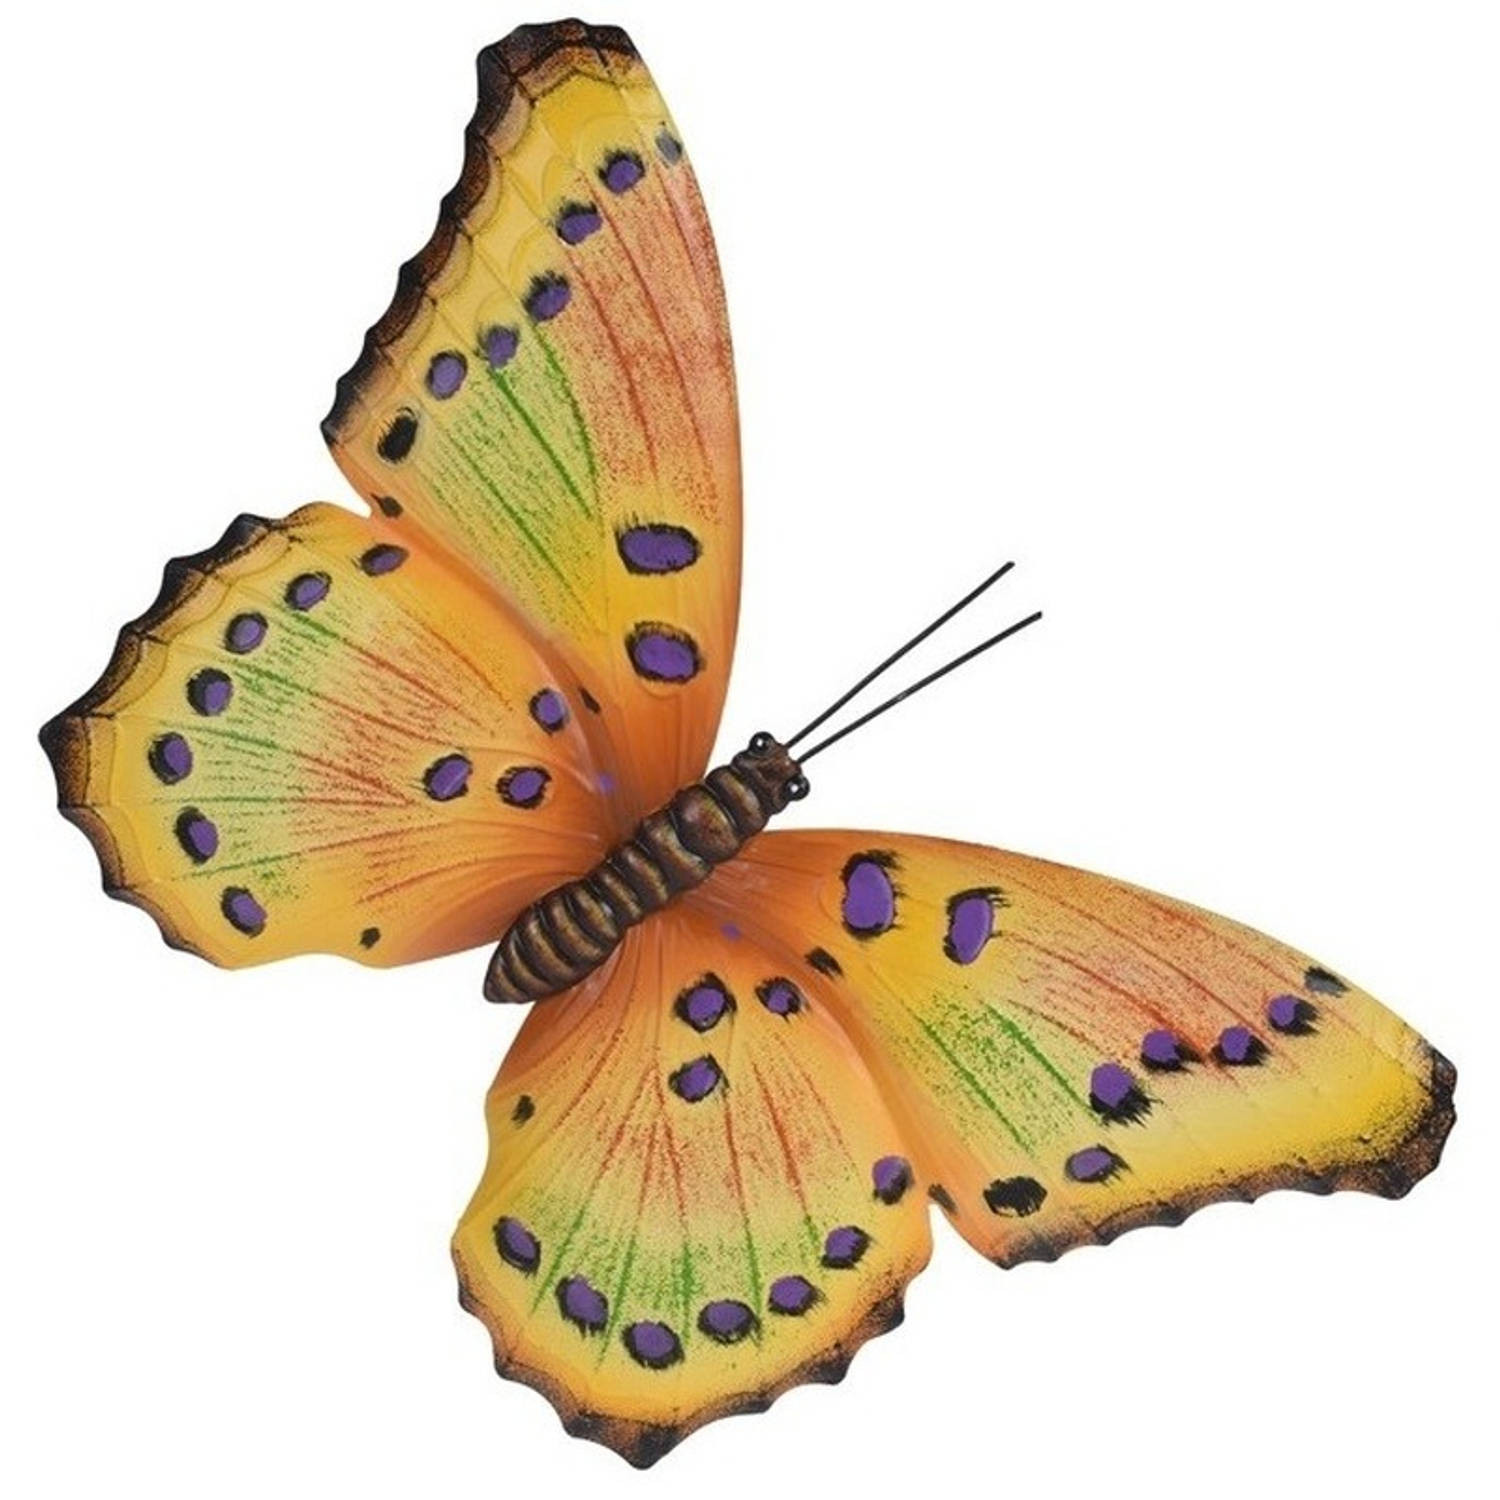 Tuindecoratie geel/paarse vlinder 44 cm - Tuinbeelden